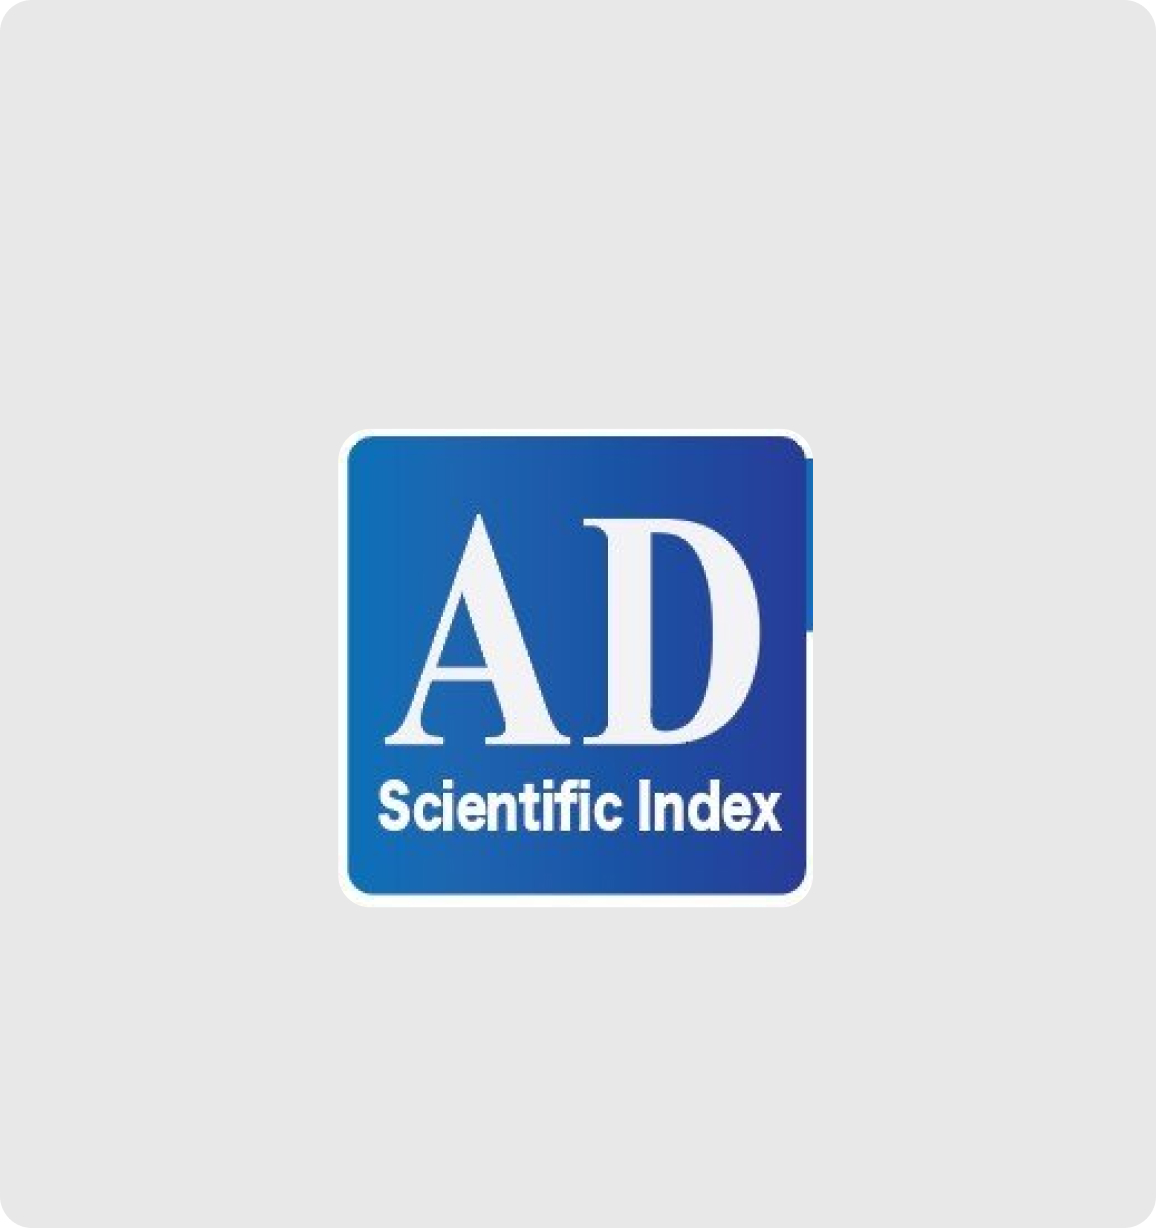 A D Scientific index logo